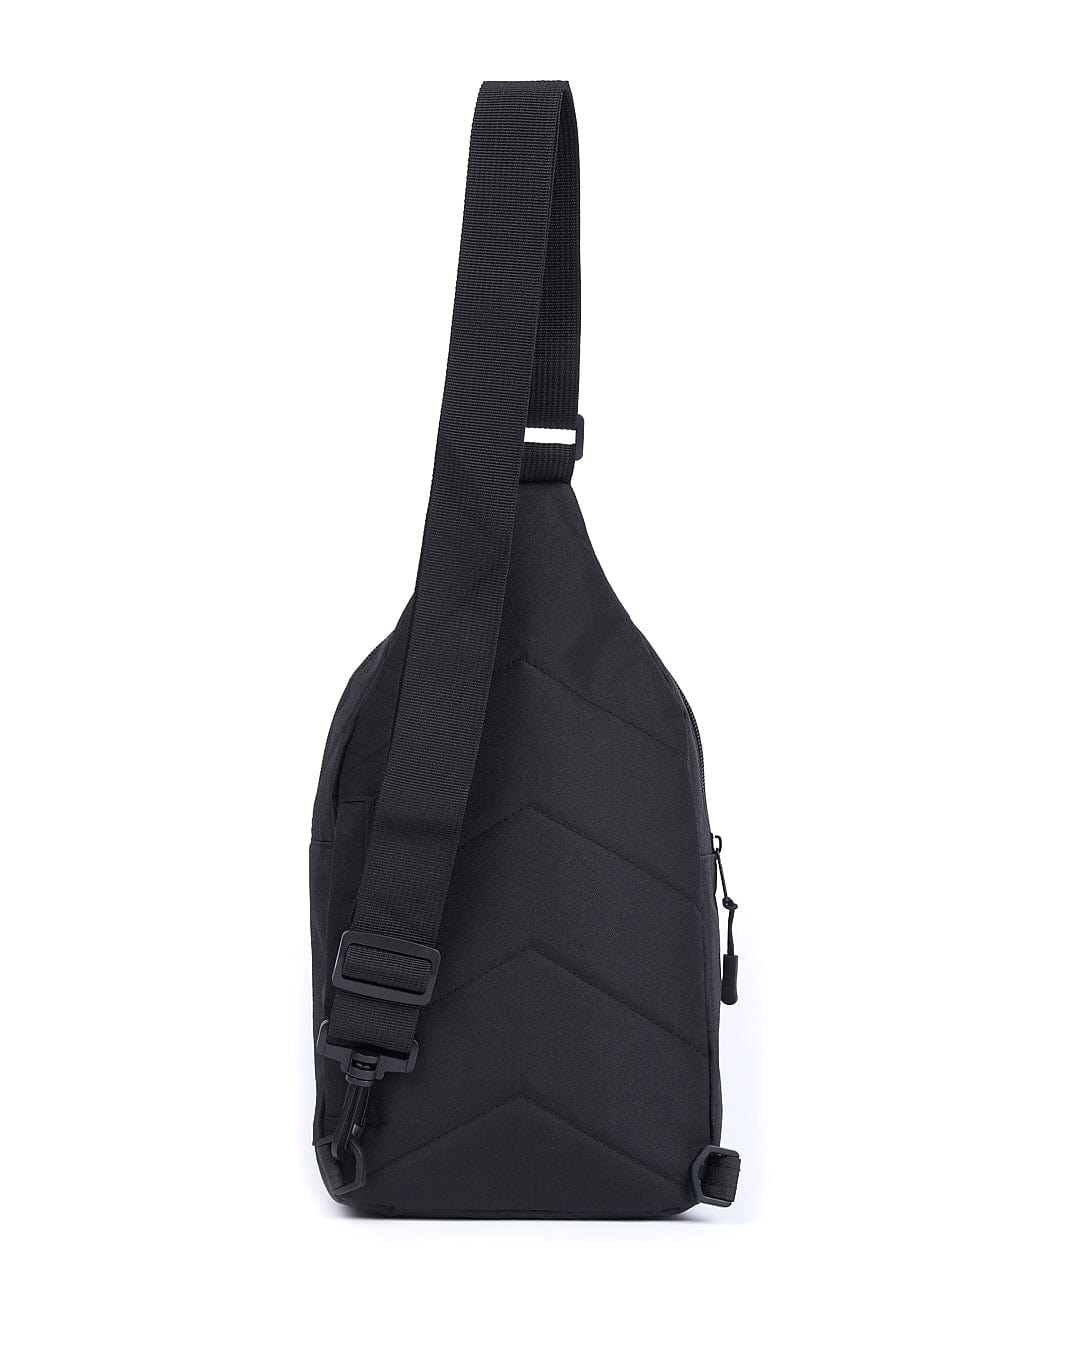 A Coda - Cross-Body Bag - Black by Saltrock on a white background.